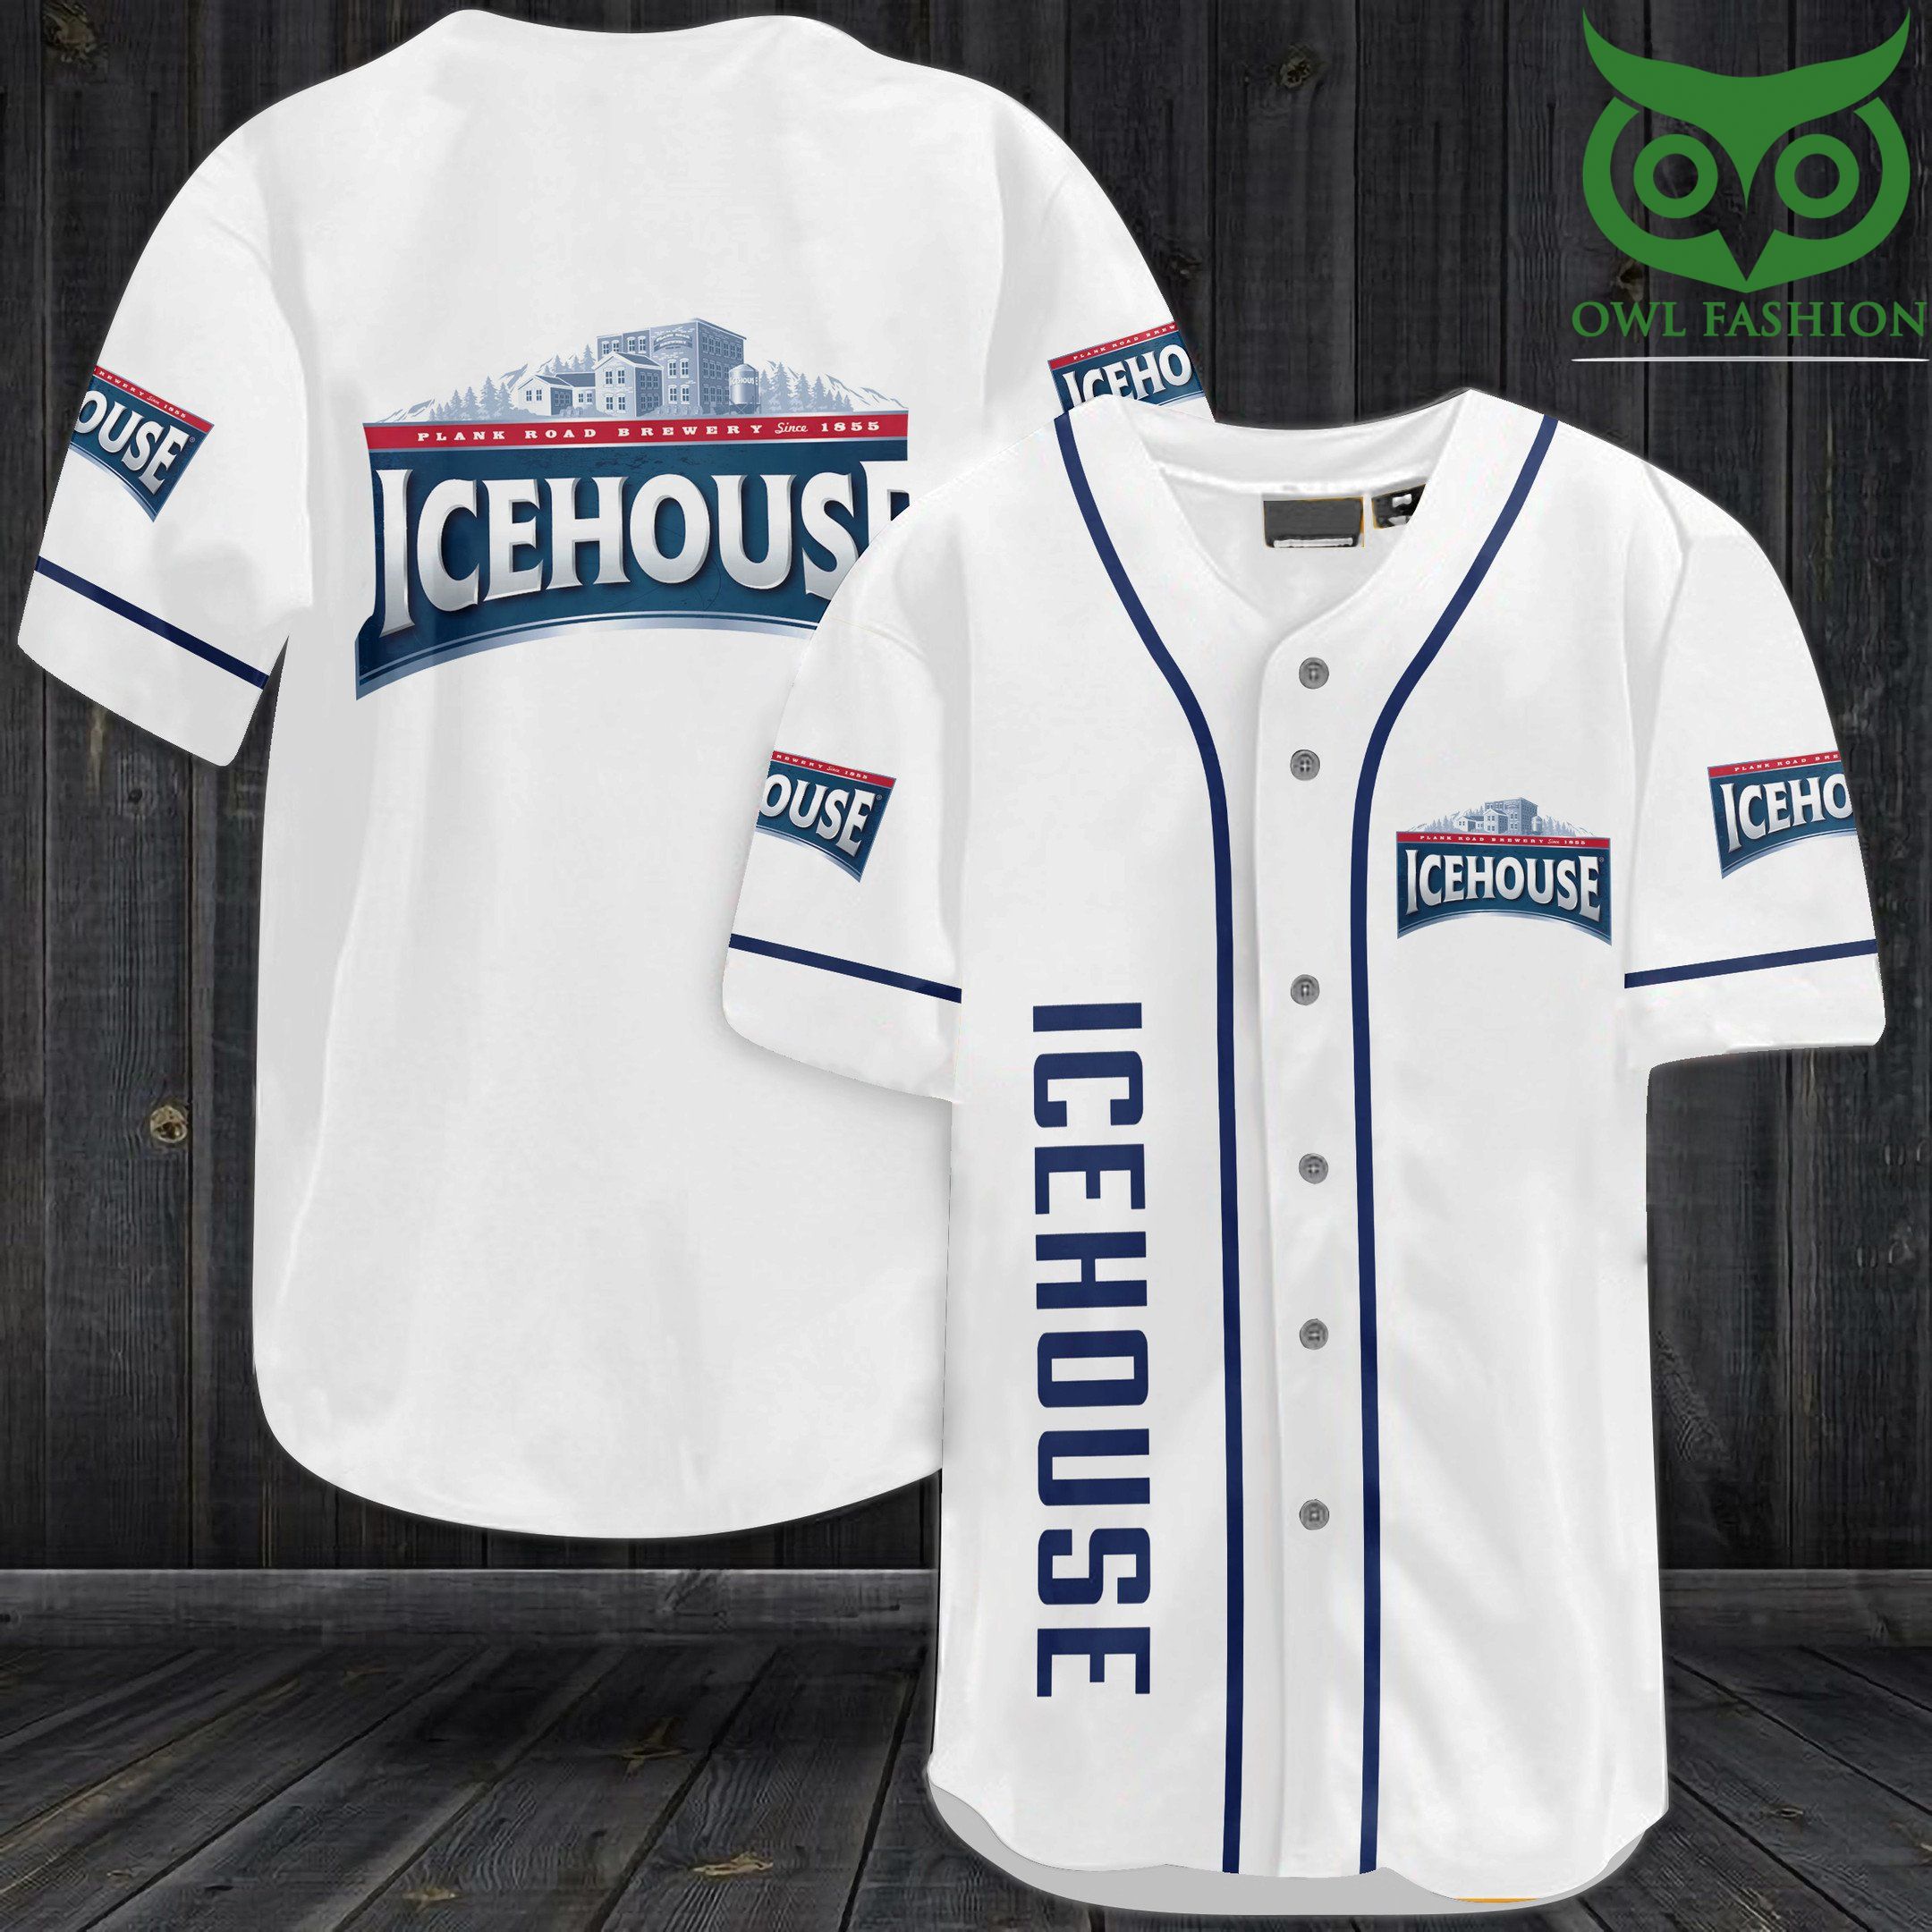 33 Icehouse white Baseball Jersey Shirt